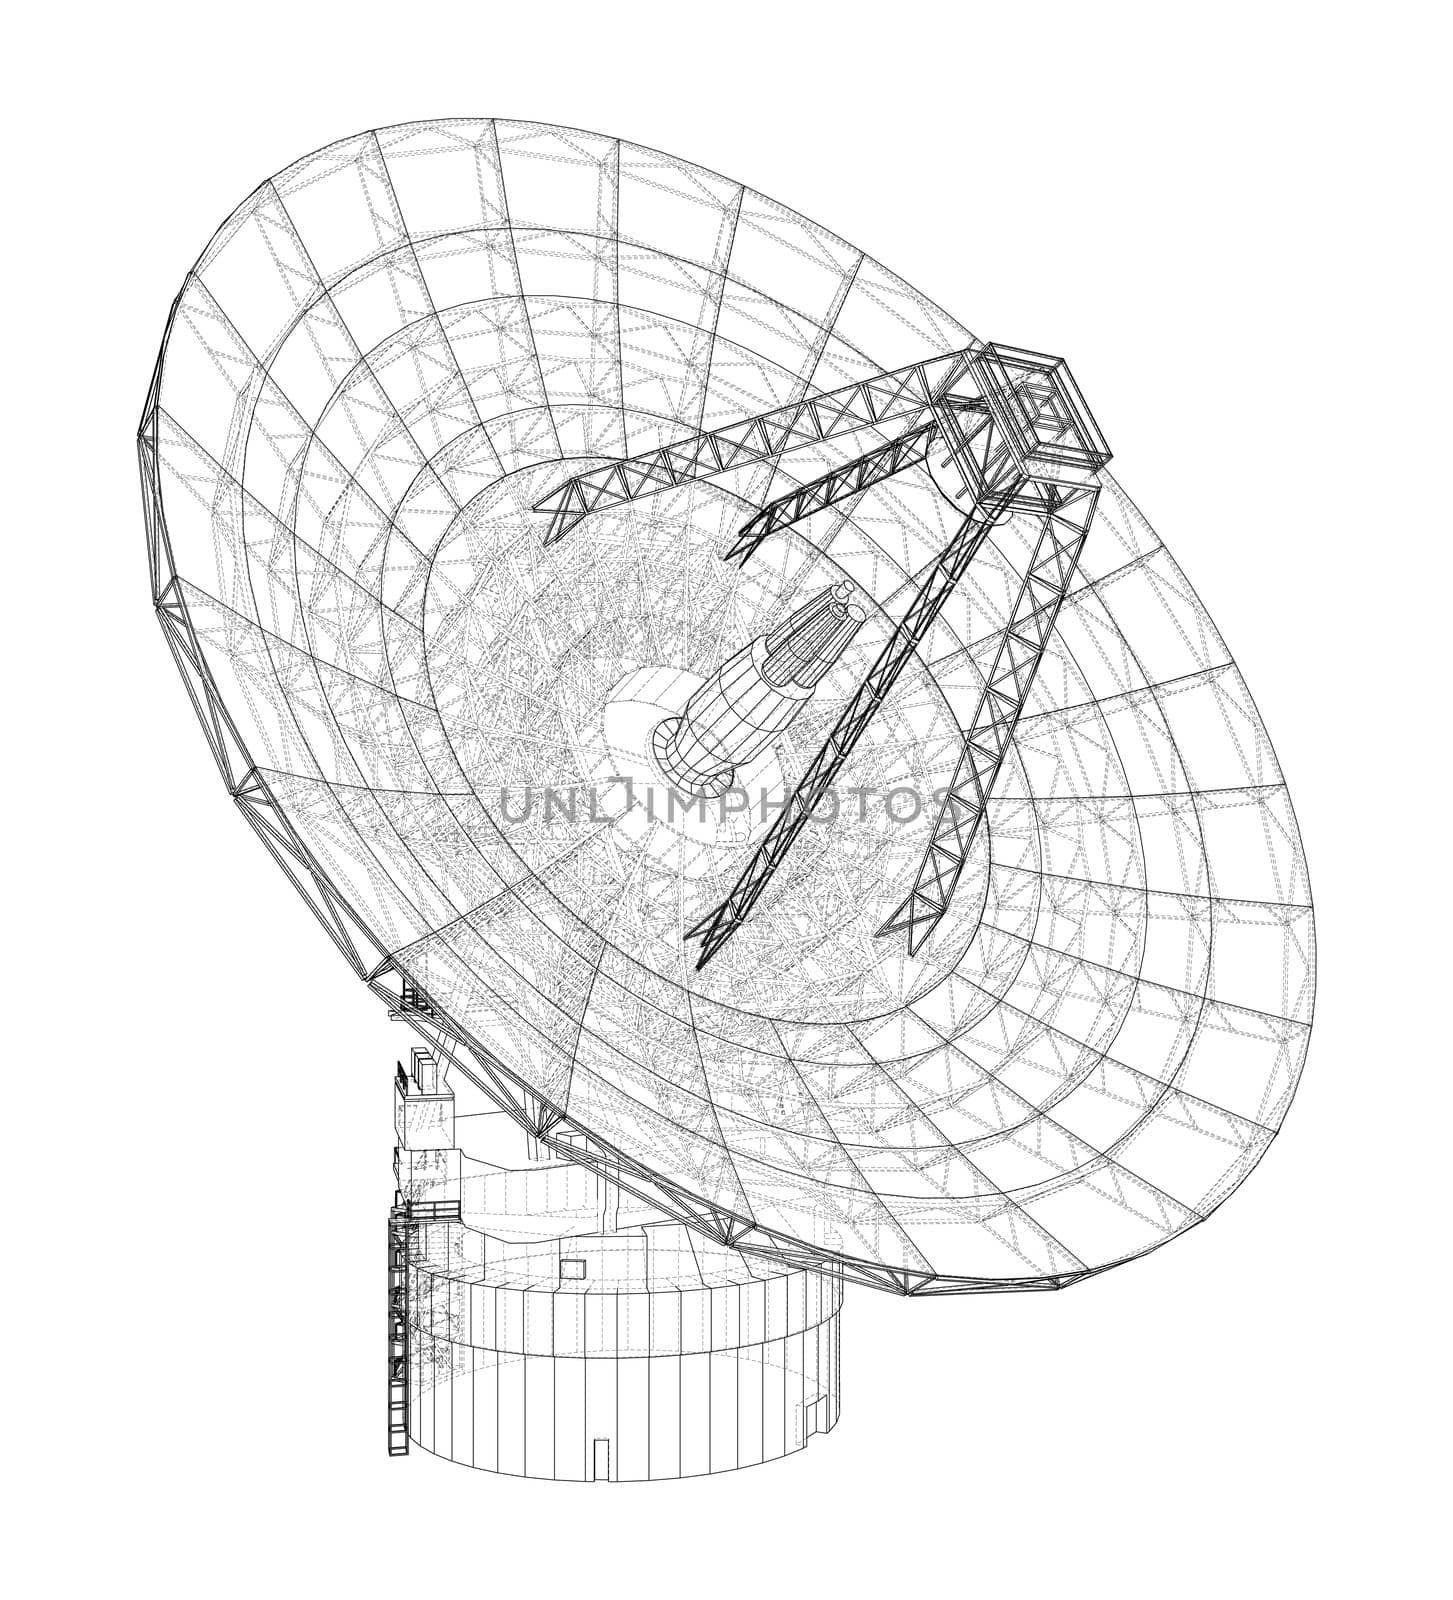 Radio Telescope concept outline by cherezoff